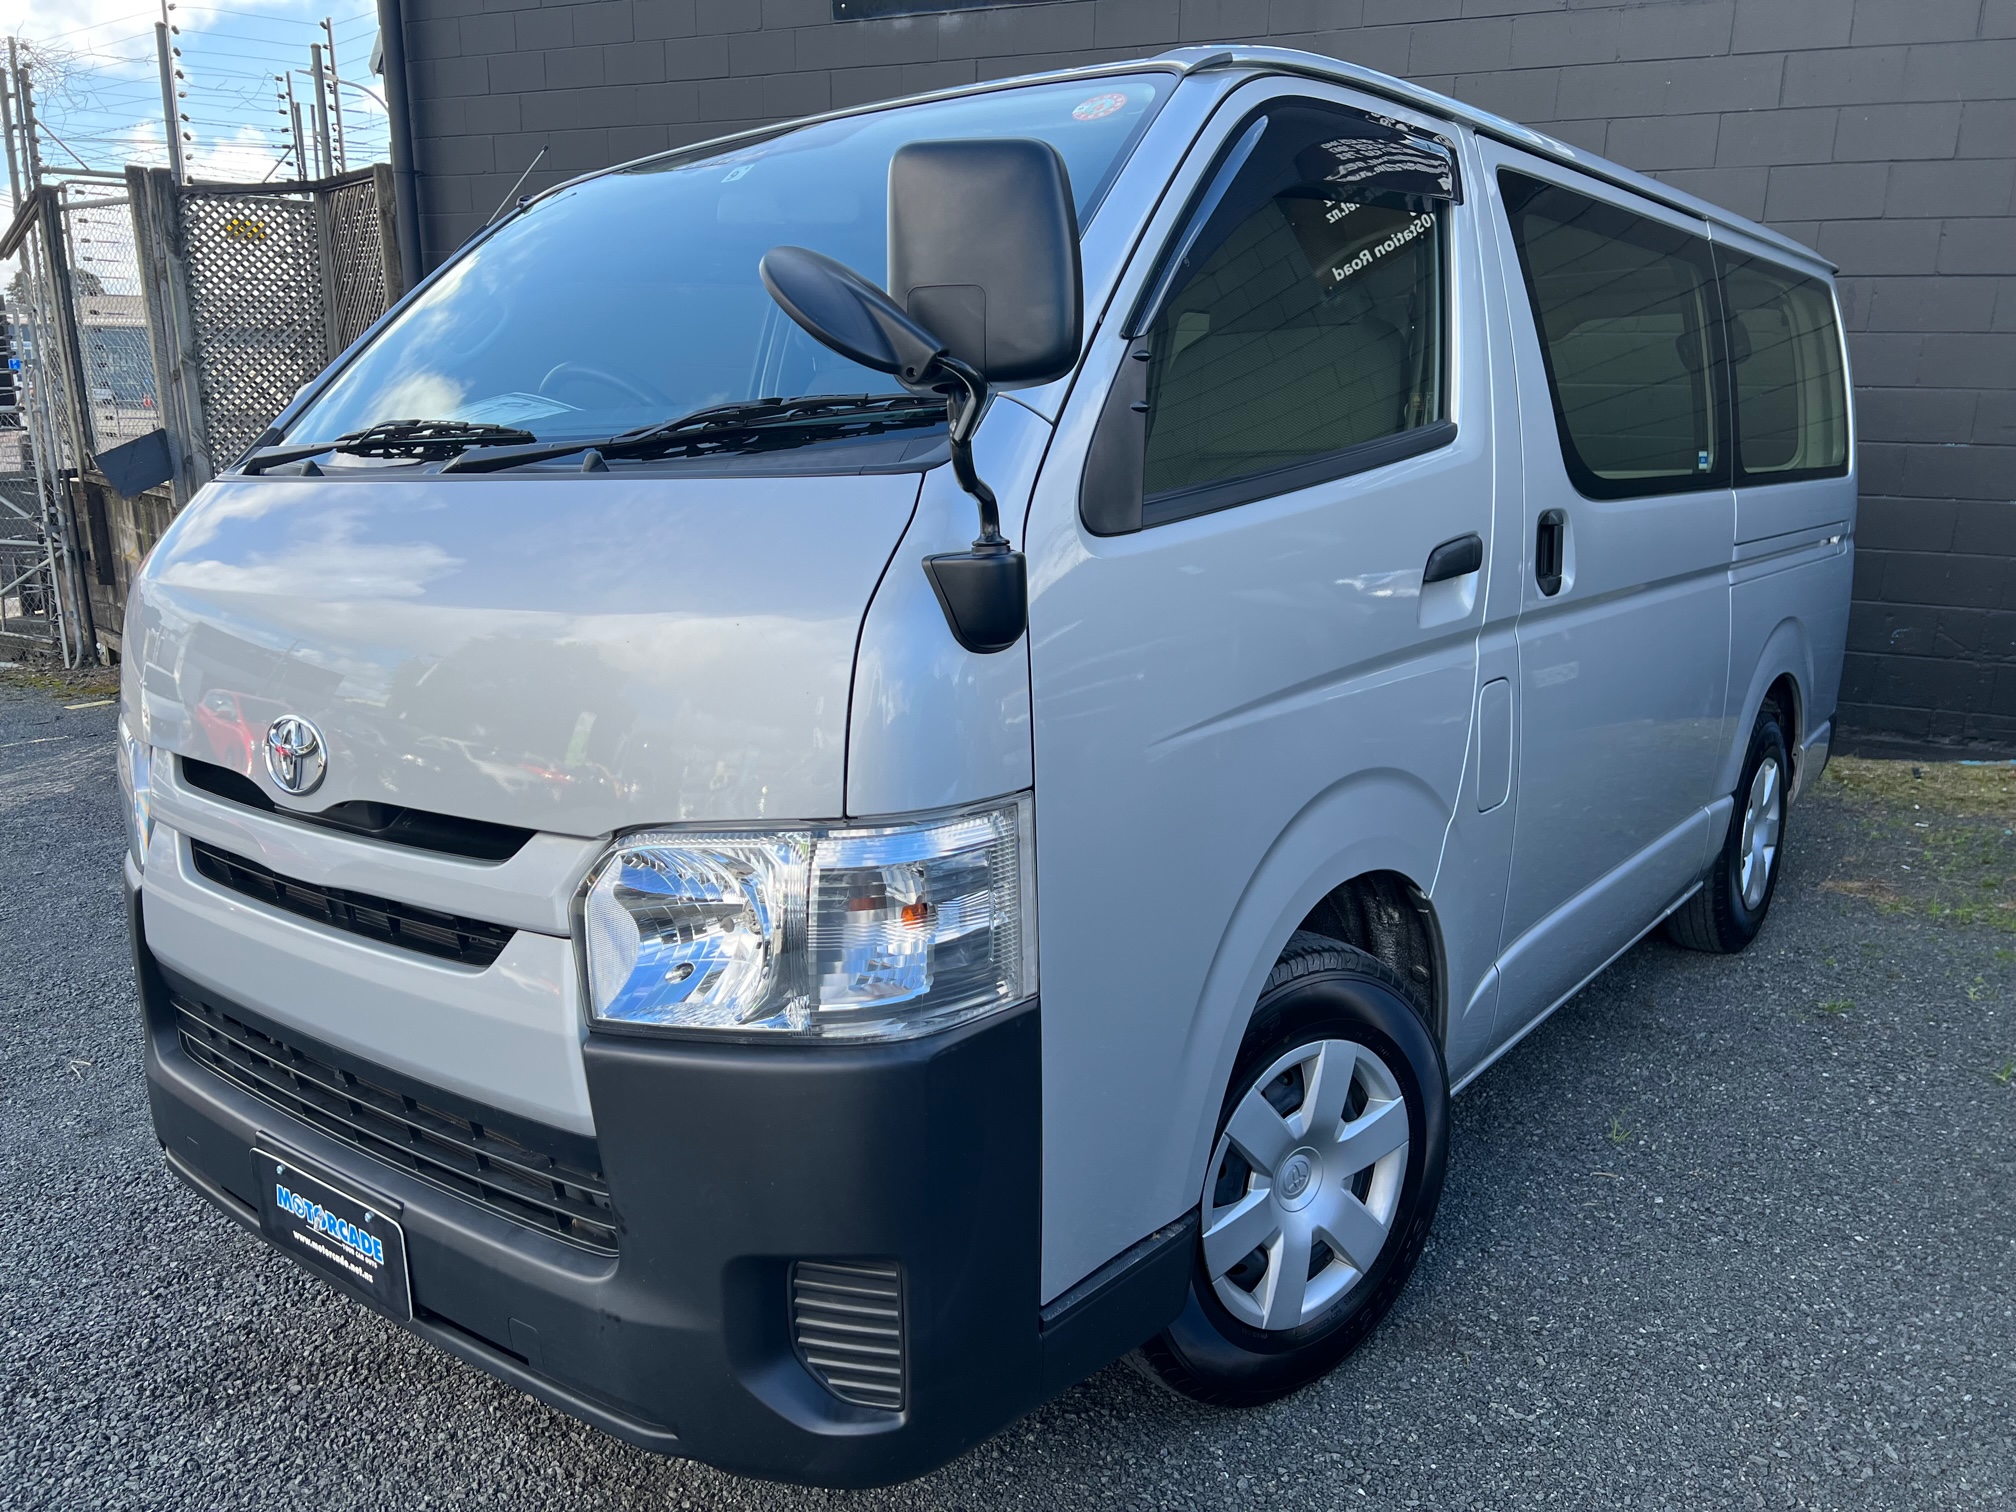 Toyota Hiace 2019 Image 1